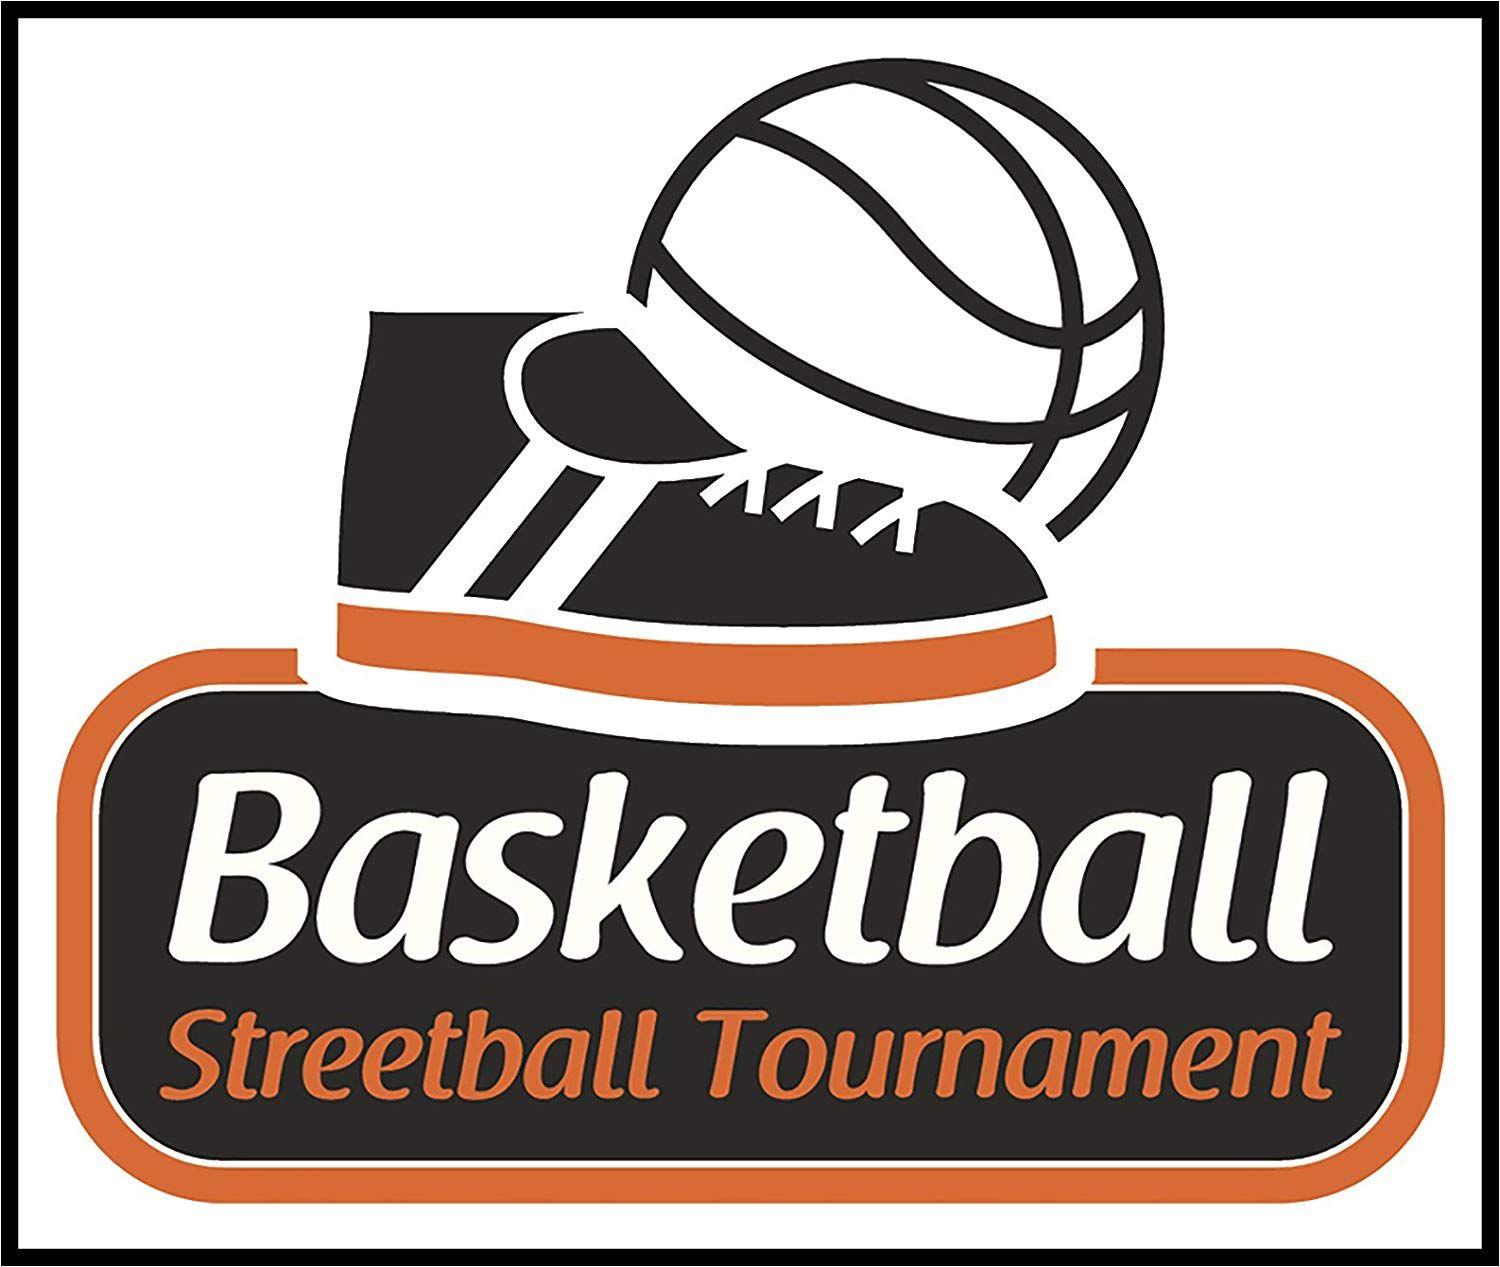 Simple Basketball Logo - Cool Simple Basketball Sport Championship Tournament